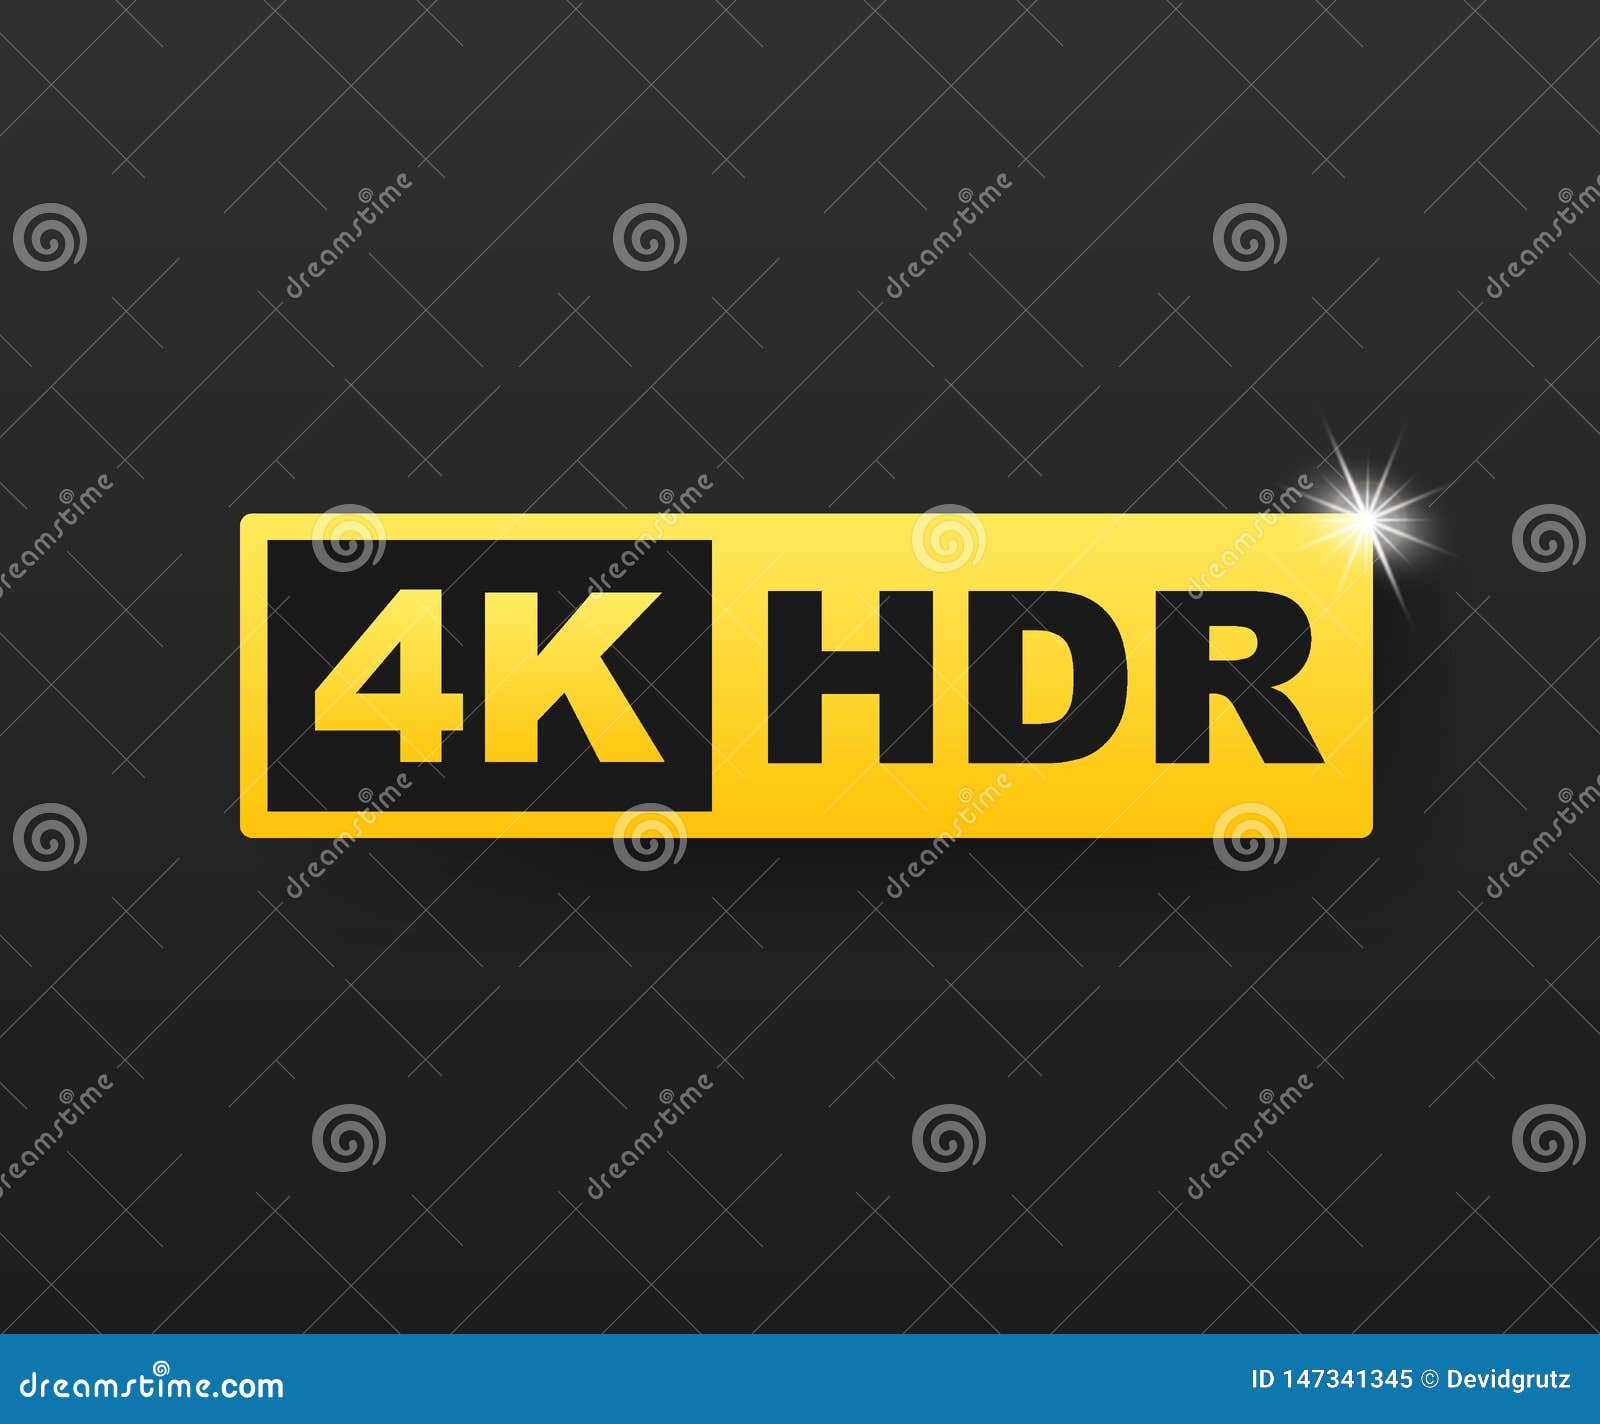 4k ultra hd , high definition 4k resolution mark, hdr.  stock 